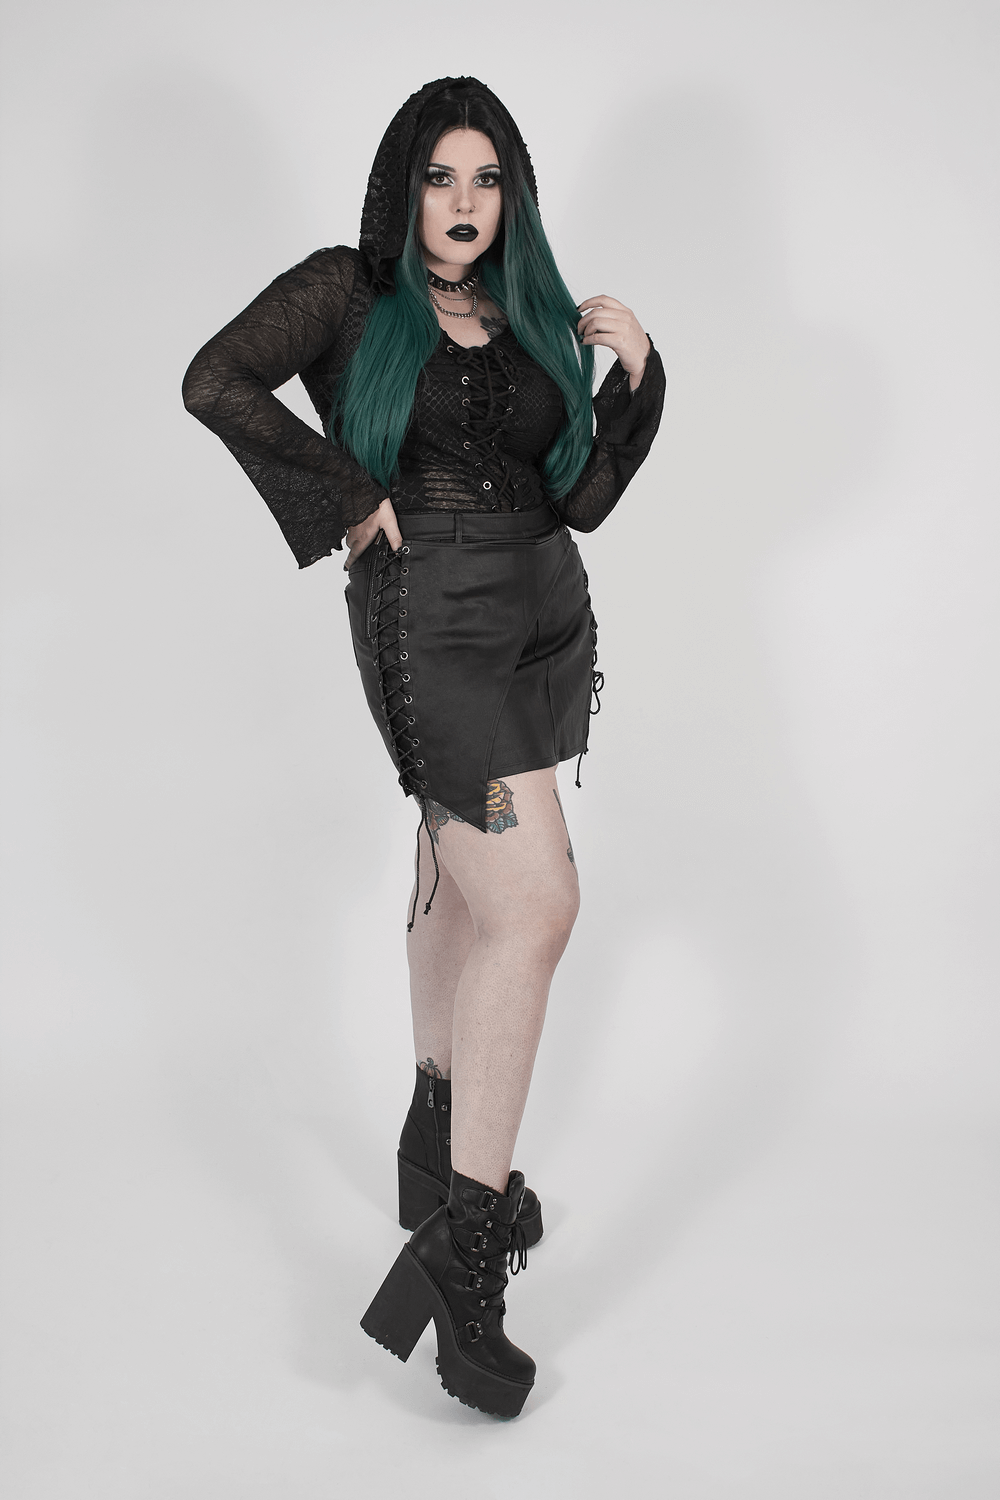 Stylish Adjustable Lace-Up Faux Leather Mini Skirt - HARD'N'HEAVY